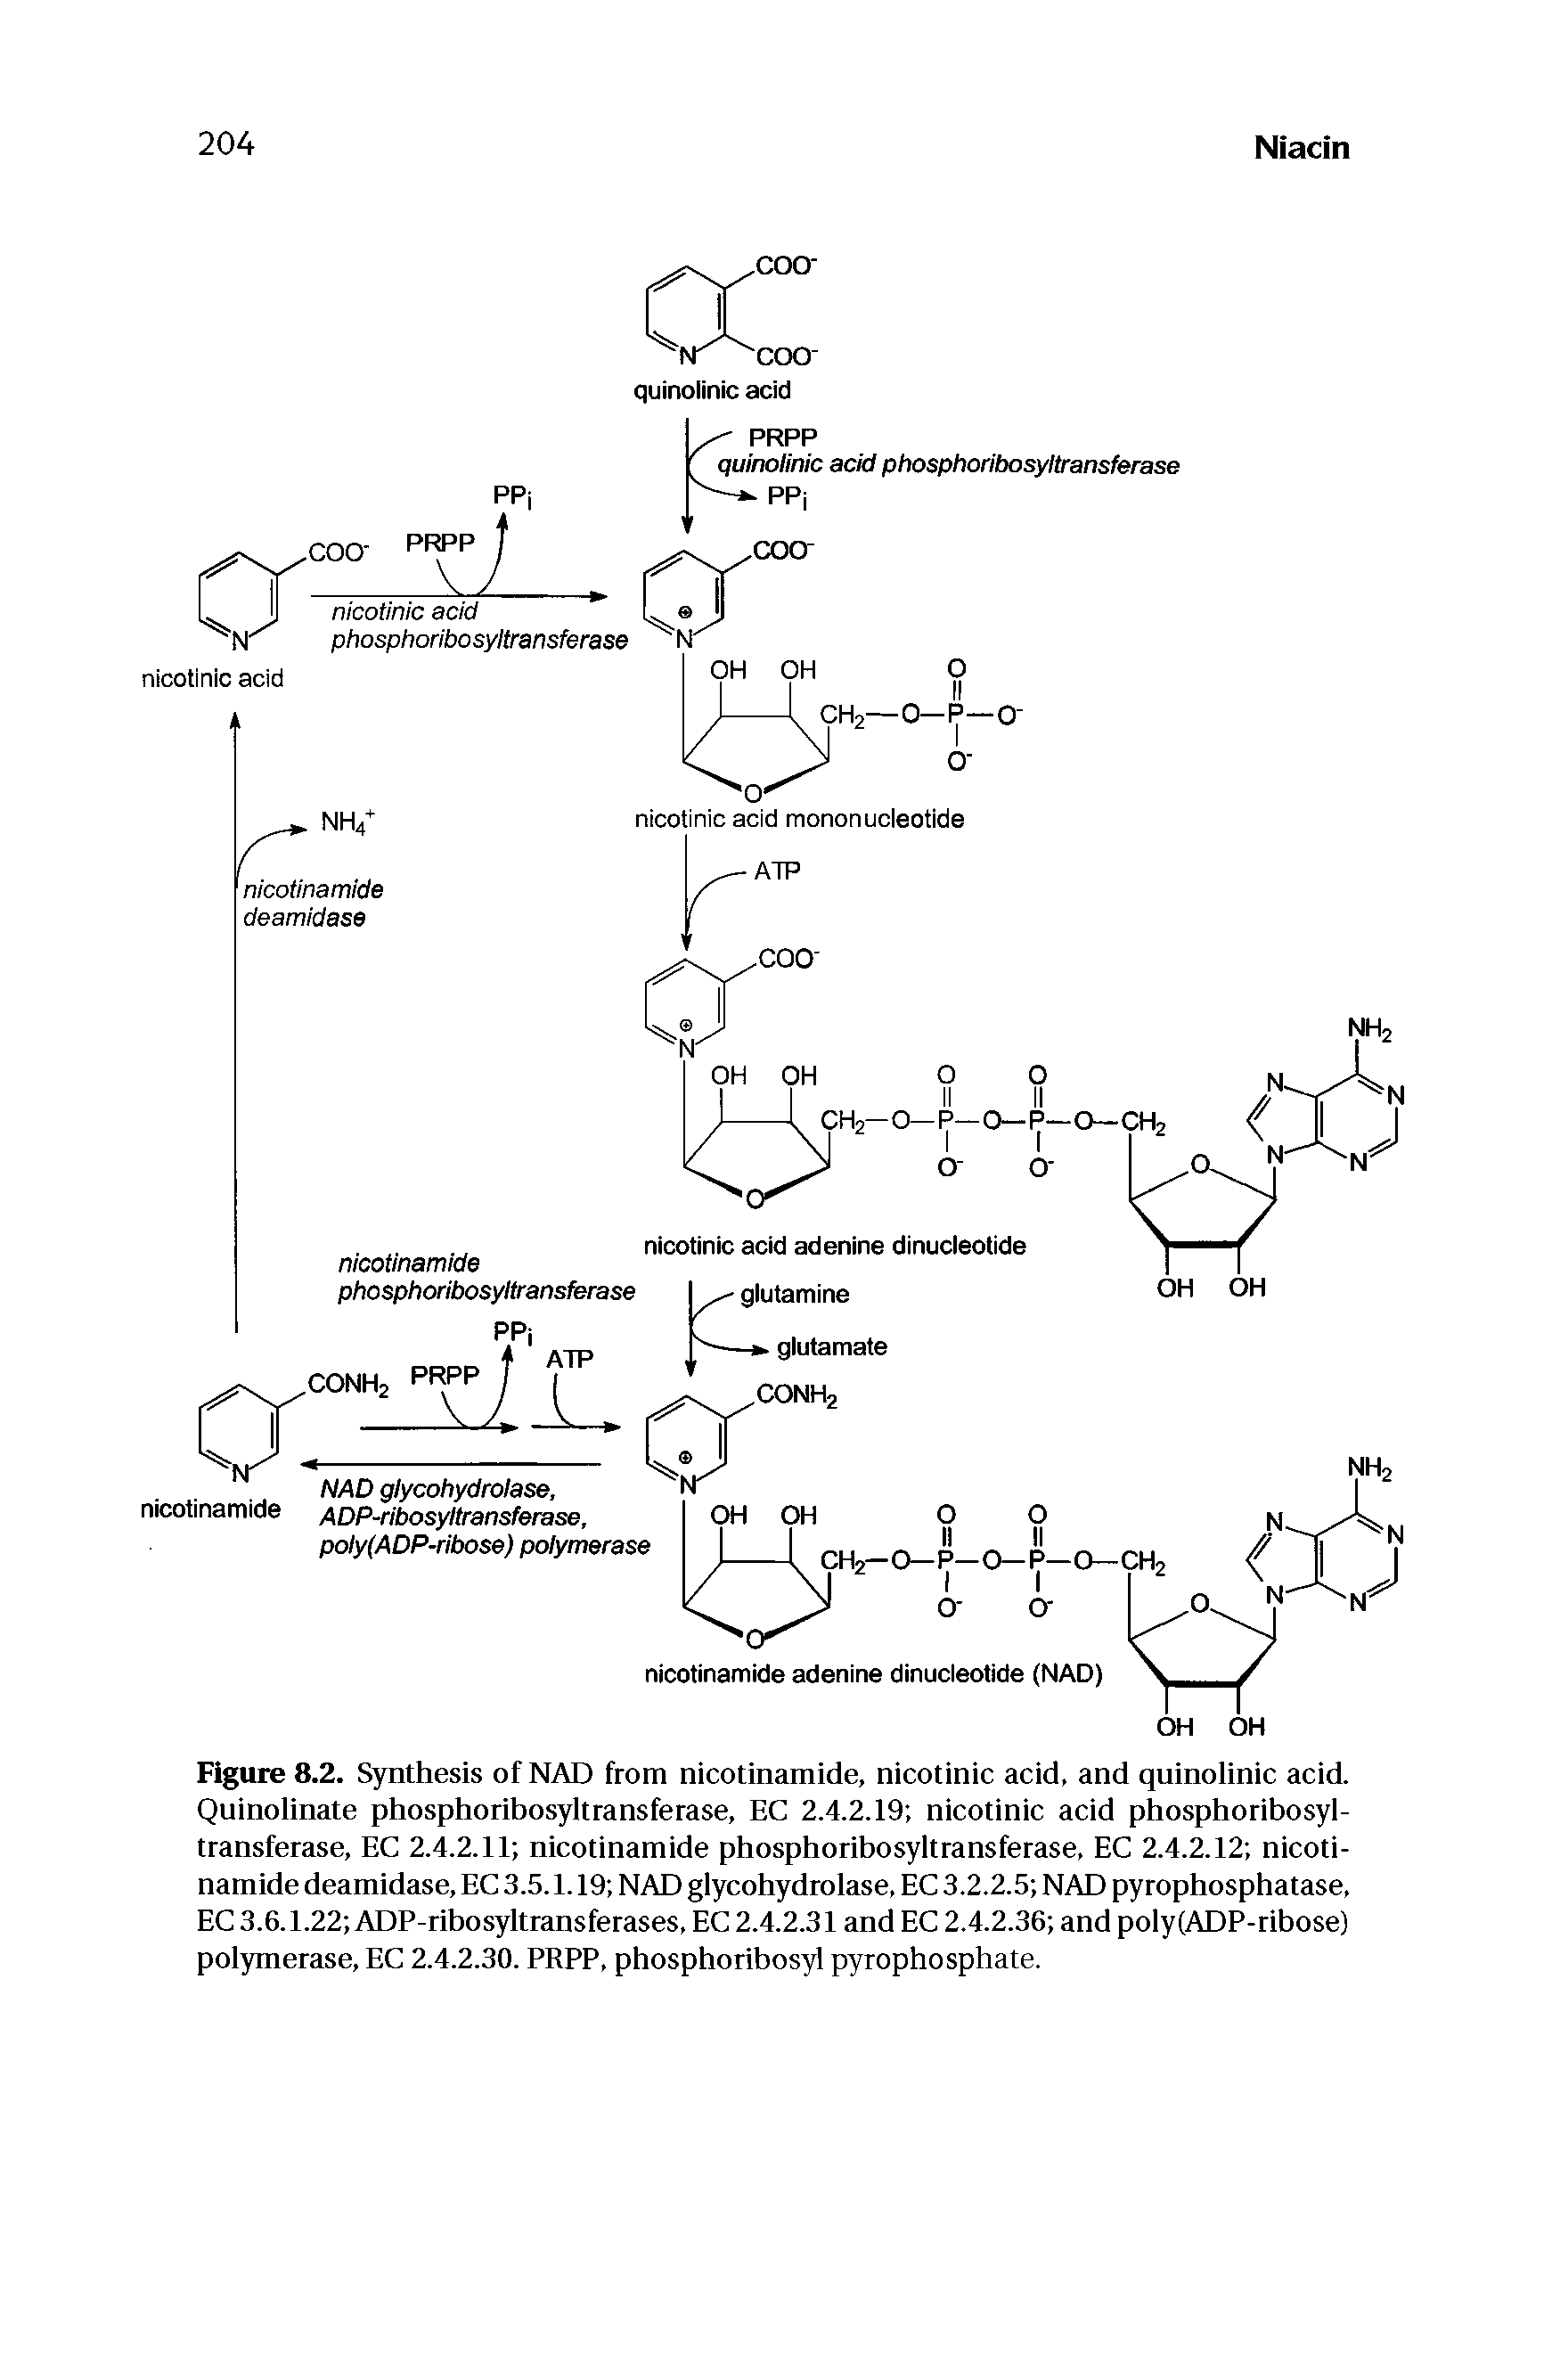 Figure 8.2. Synthesis of NAD from nicotinamide, nicotinic acid, and qninolinic acid. Quinolinate phosphoribosyltransferase, EC 2.4.2.19 nicotinic acid phosphoribosyl-transferase, EC 2.4.2.11 nicotinamide phosphoribosyltransferase, EC 2.4.2.12 nicotinamide deamidase, EC 3.5.1.19 NAD glycohydrolase, EC 3.2.2.S NAD pyrophosphatase, EC 3.6.1.22 ADP-ribosyltransferases, EC 2.4.2.31 and EC 2.4.2.36 and poly(ADP-ribose) polymerase, EC 2.4.2.30. PRPP, phosphoribosyl pyrophosphate.